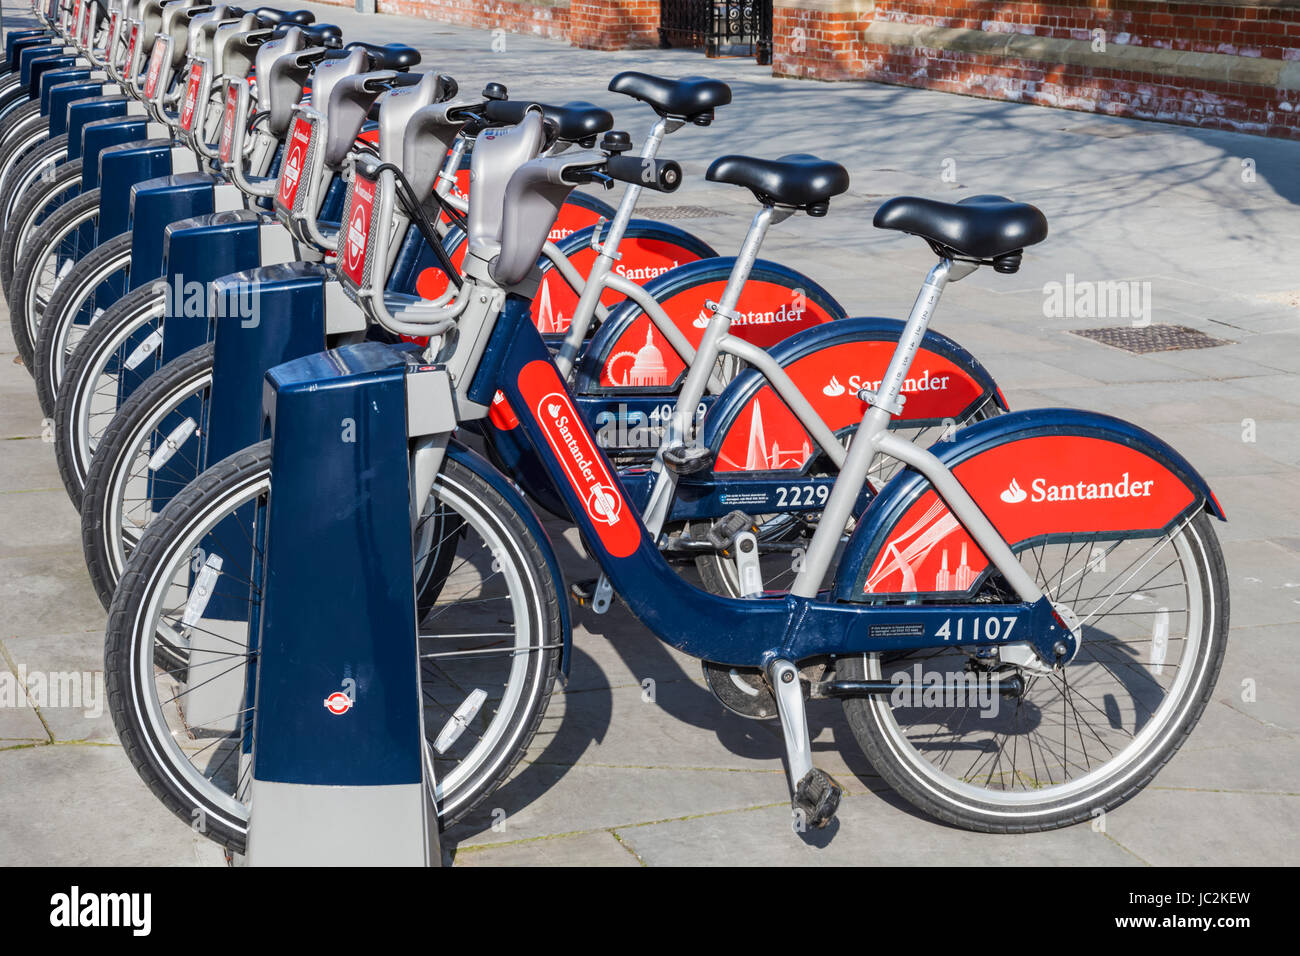 England, London, Santander Bike Hire Stand Stock Photo - Alamy